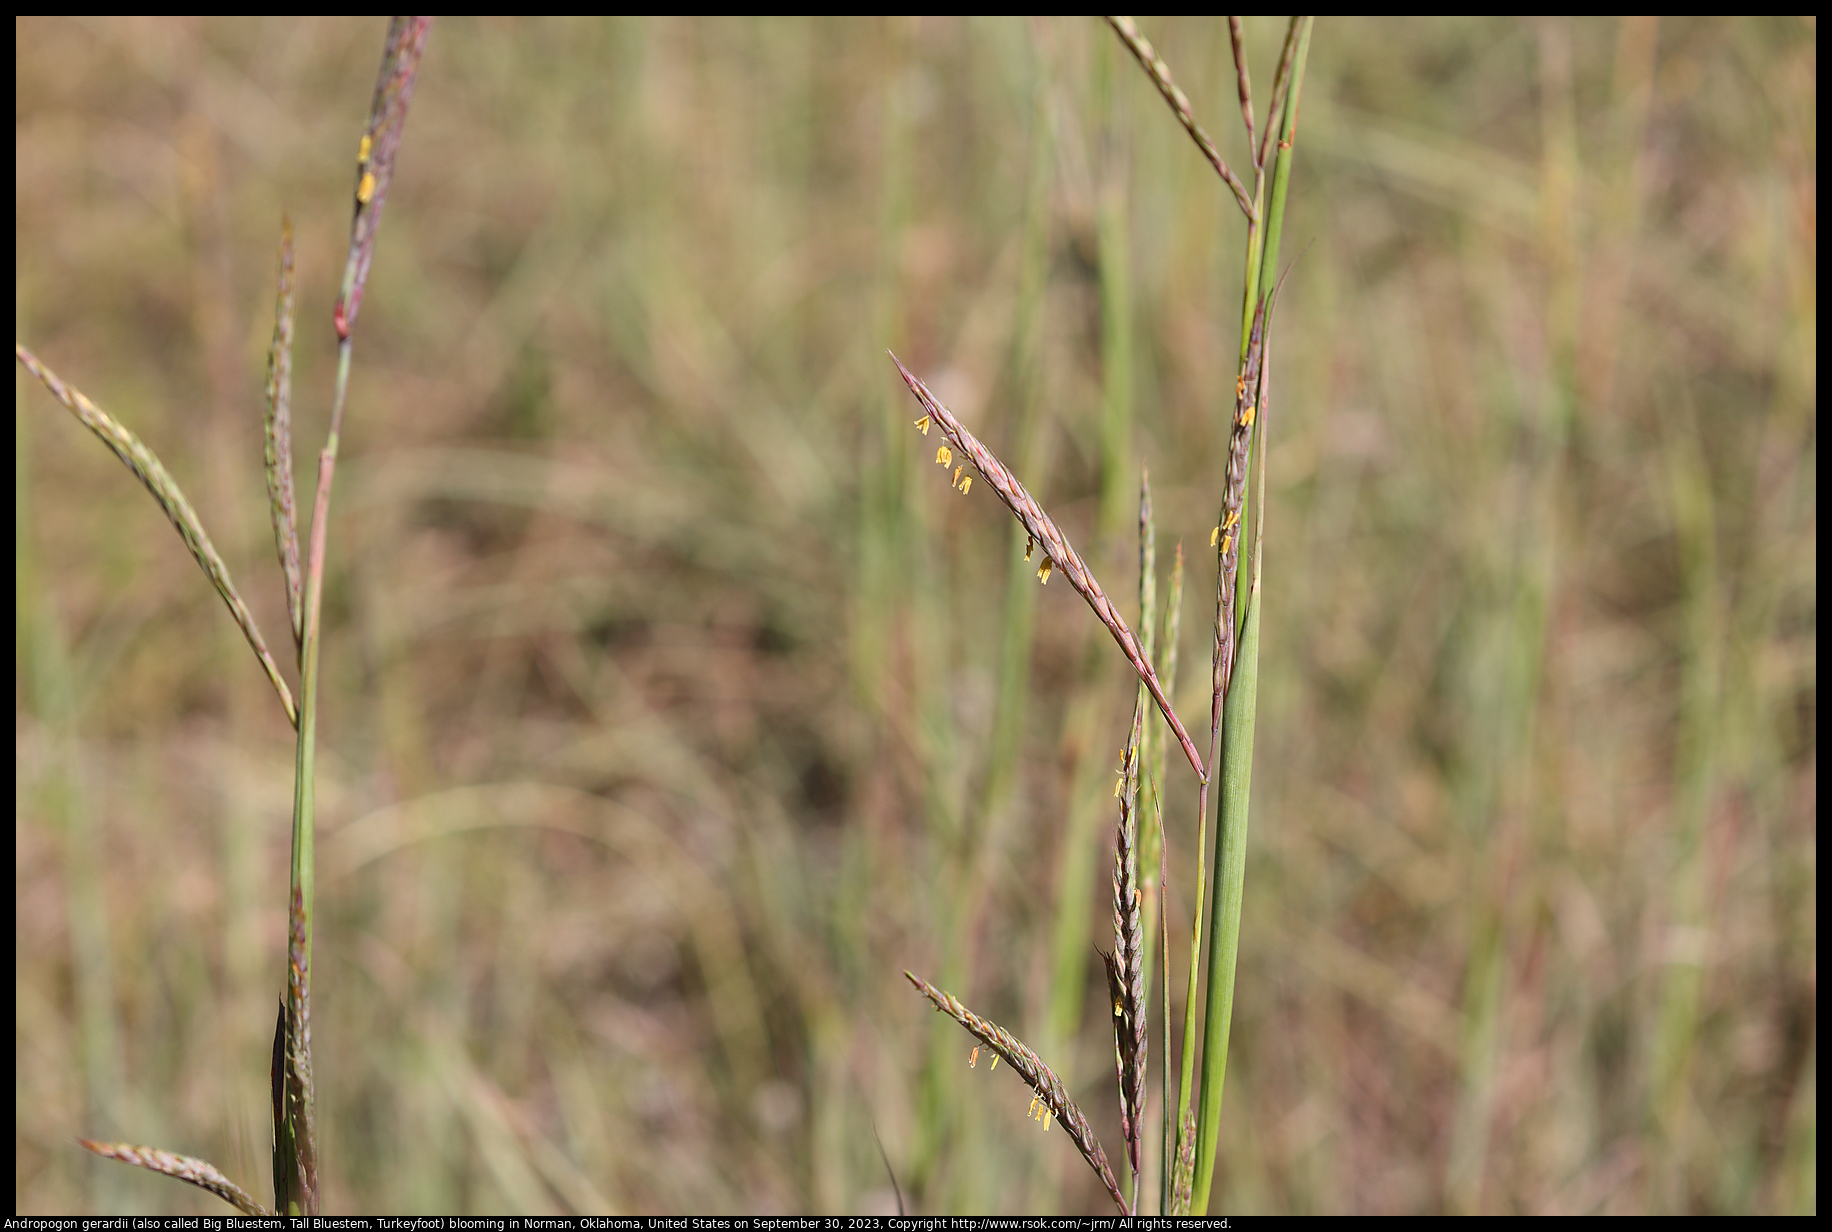 Andropogon gerardii (also called Big Bluestem, Tall Bluestem, Turkeyfoot) blooming in Norman, Oklahoma, United States, September 30, 2023